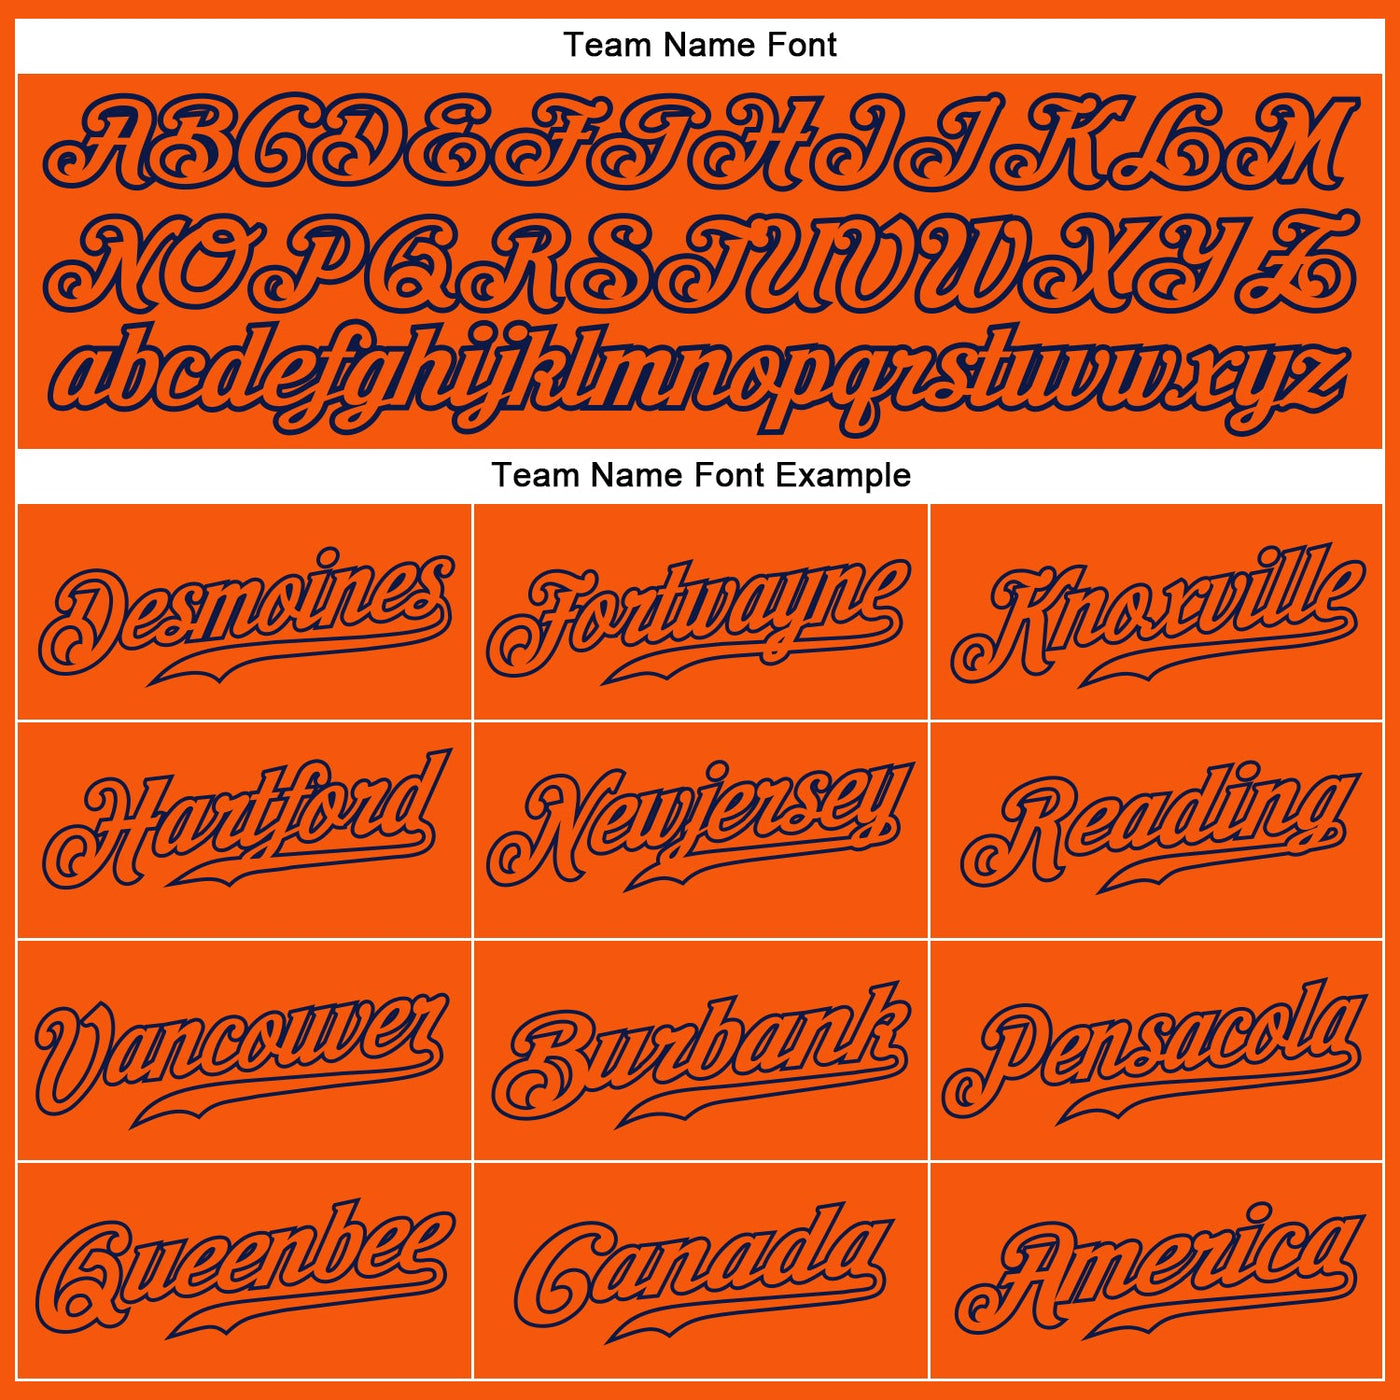 Custom Orange Orange-Navy Authentic Baseball Jersey - Owls Matrix LTD